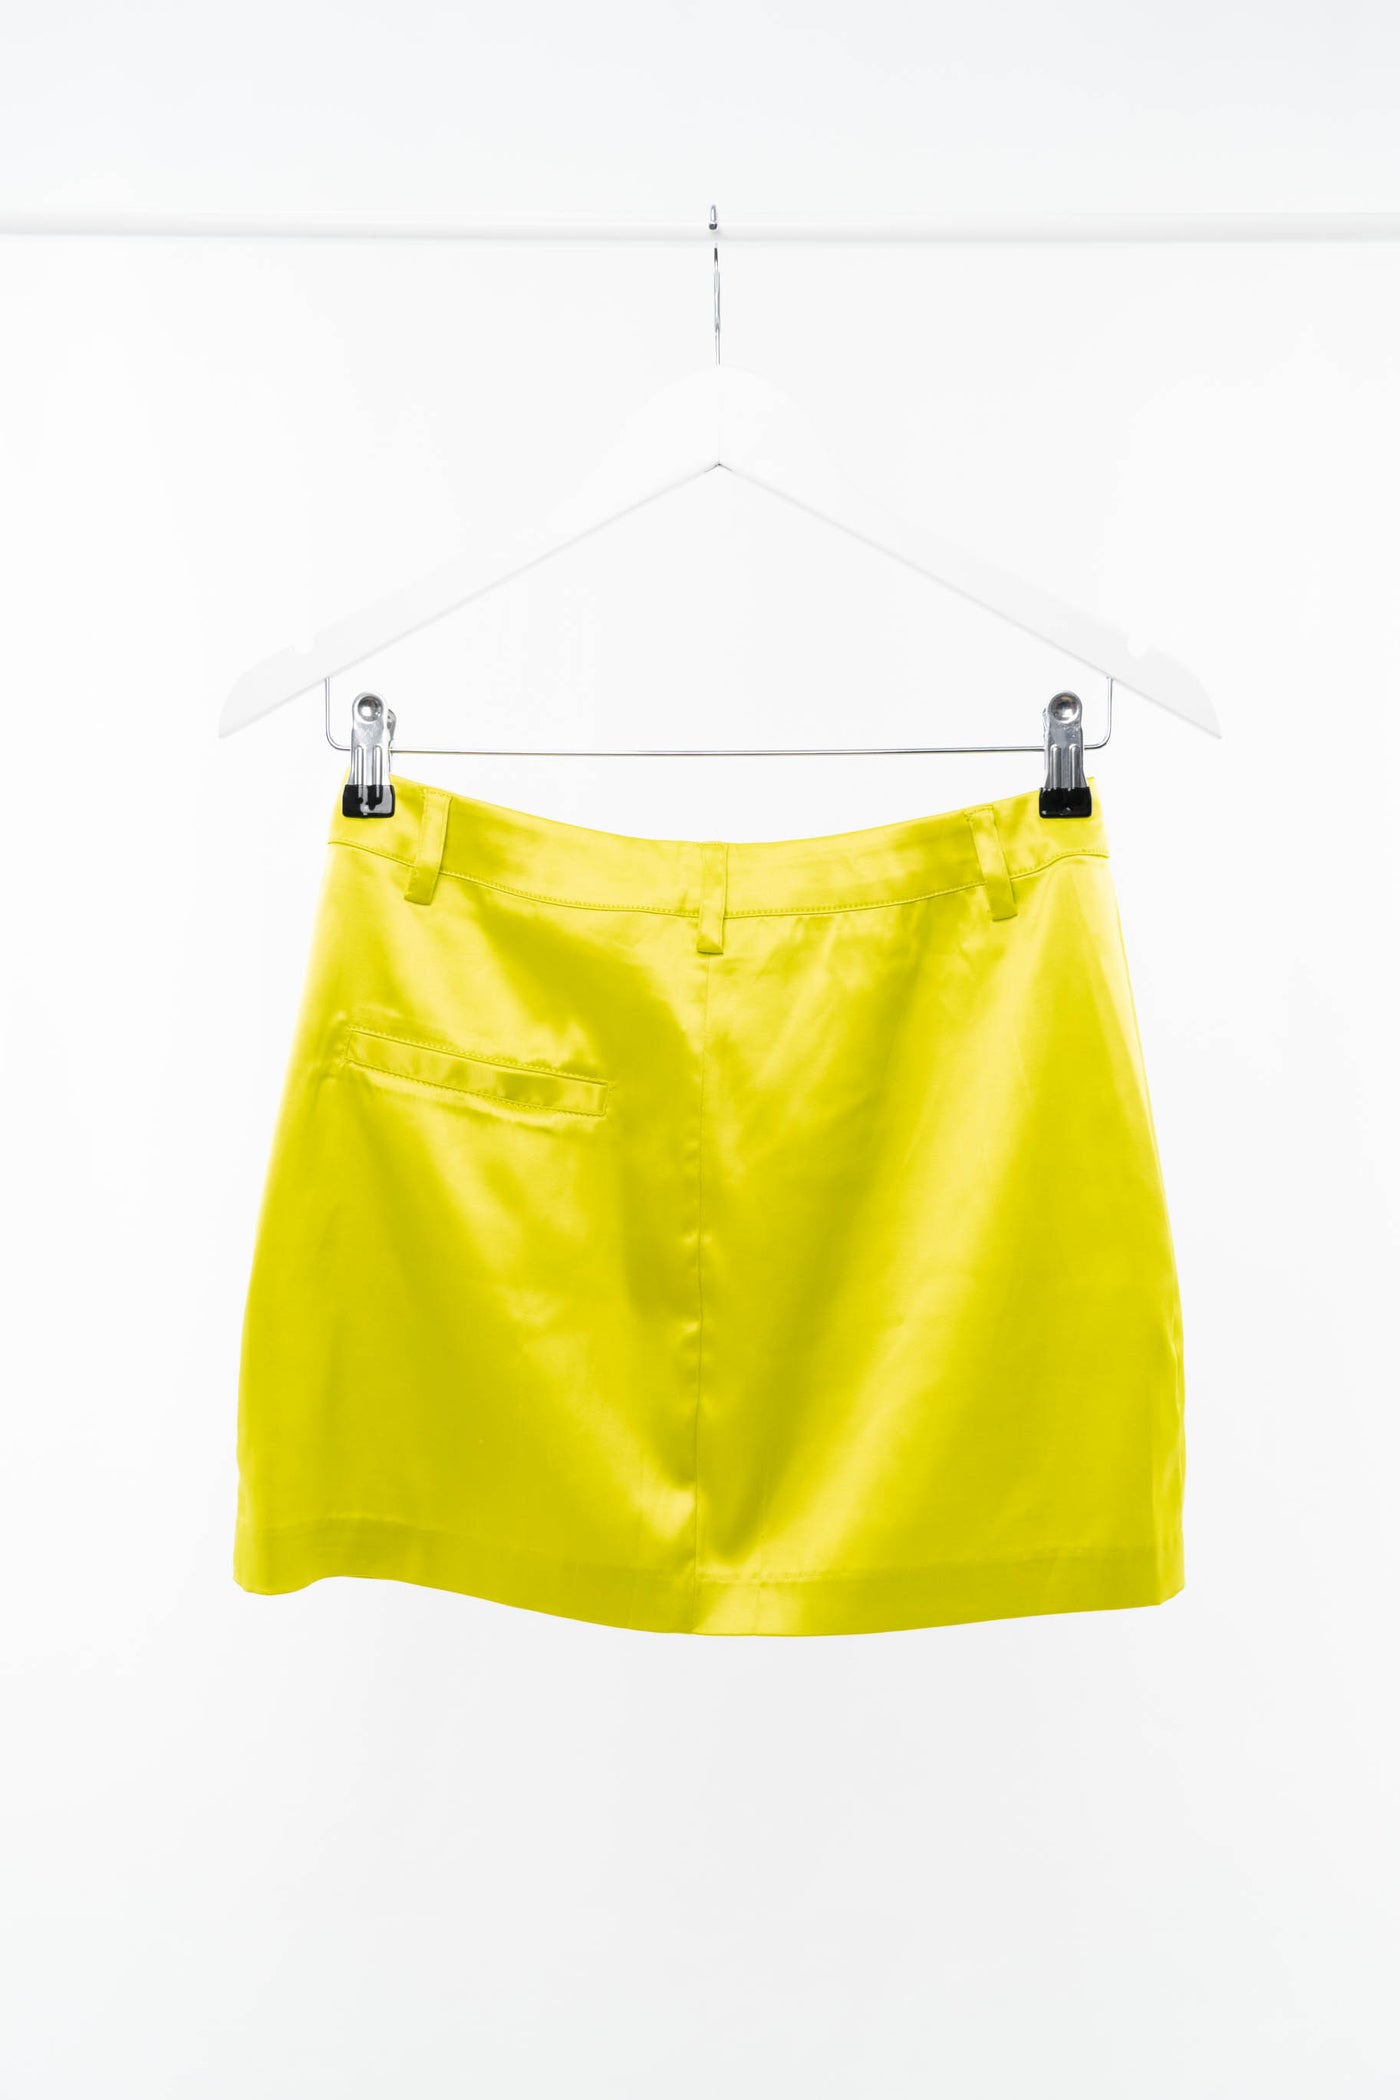 Minifalda satinada (NUEVO)